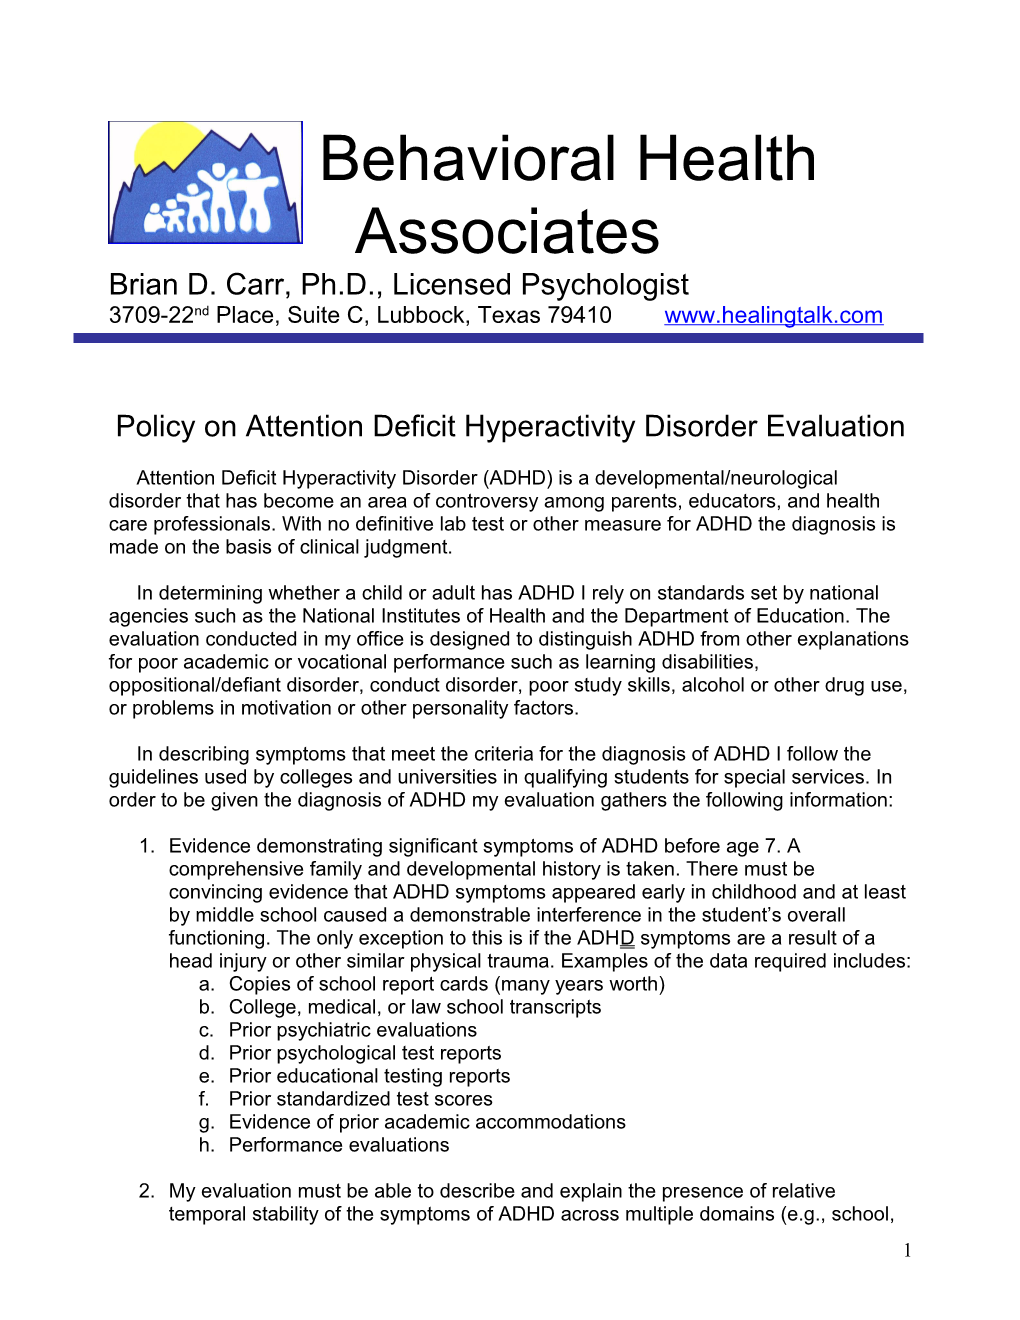 Behavioral Health Associates, P